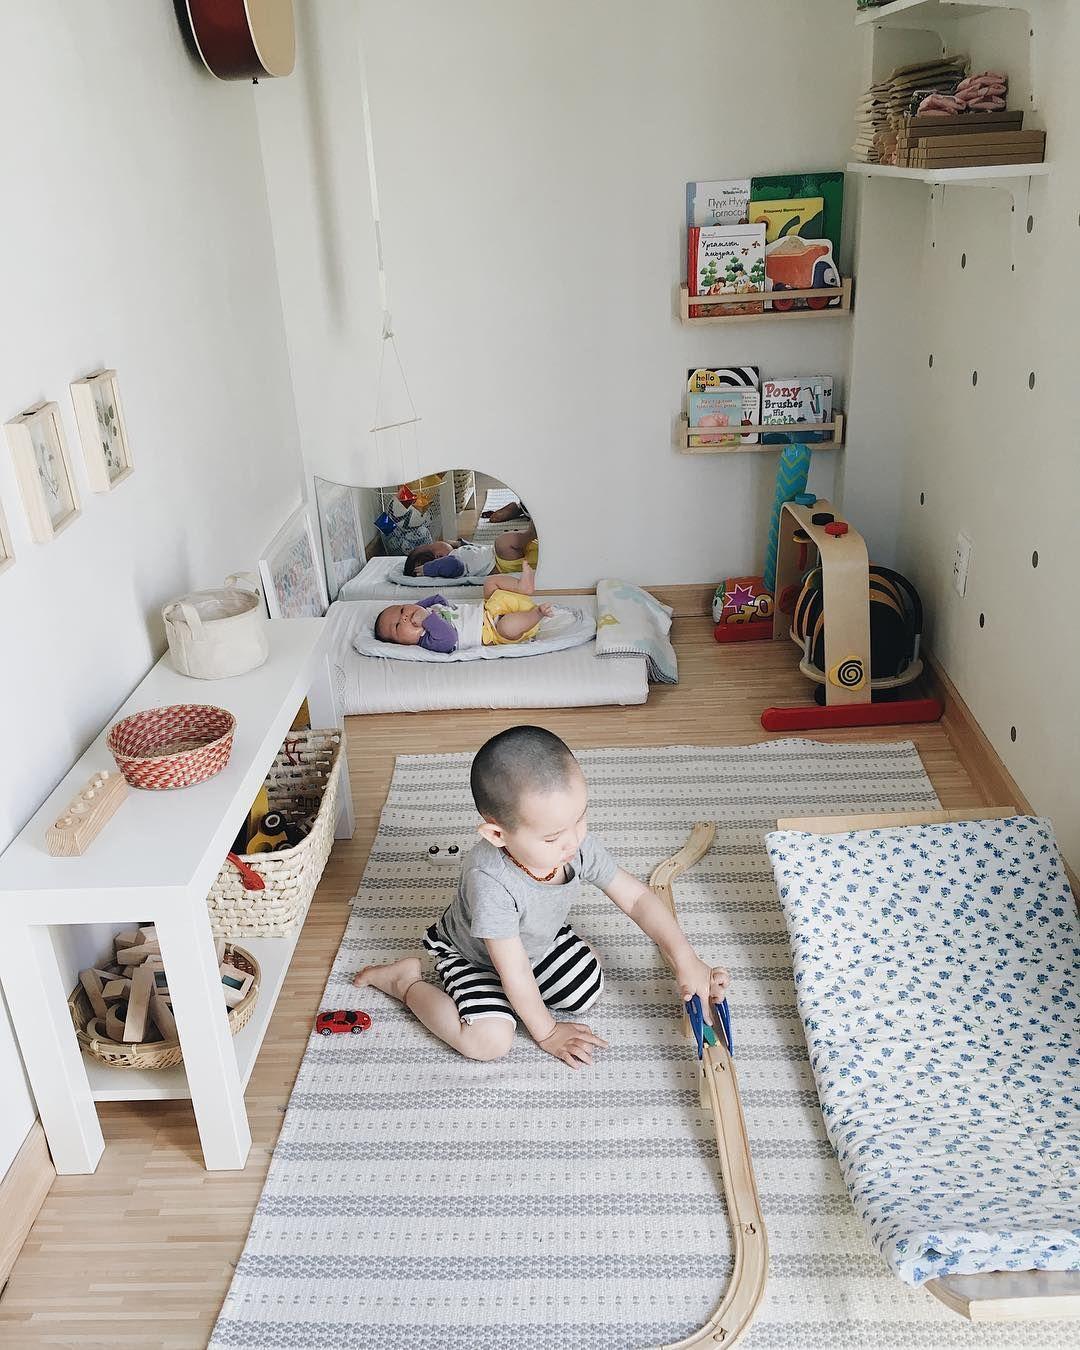 montessori bedroom - habitacion infantil - organizacion - dormitorio montessori - clean